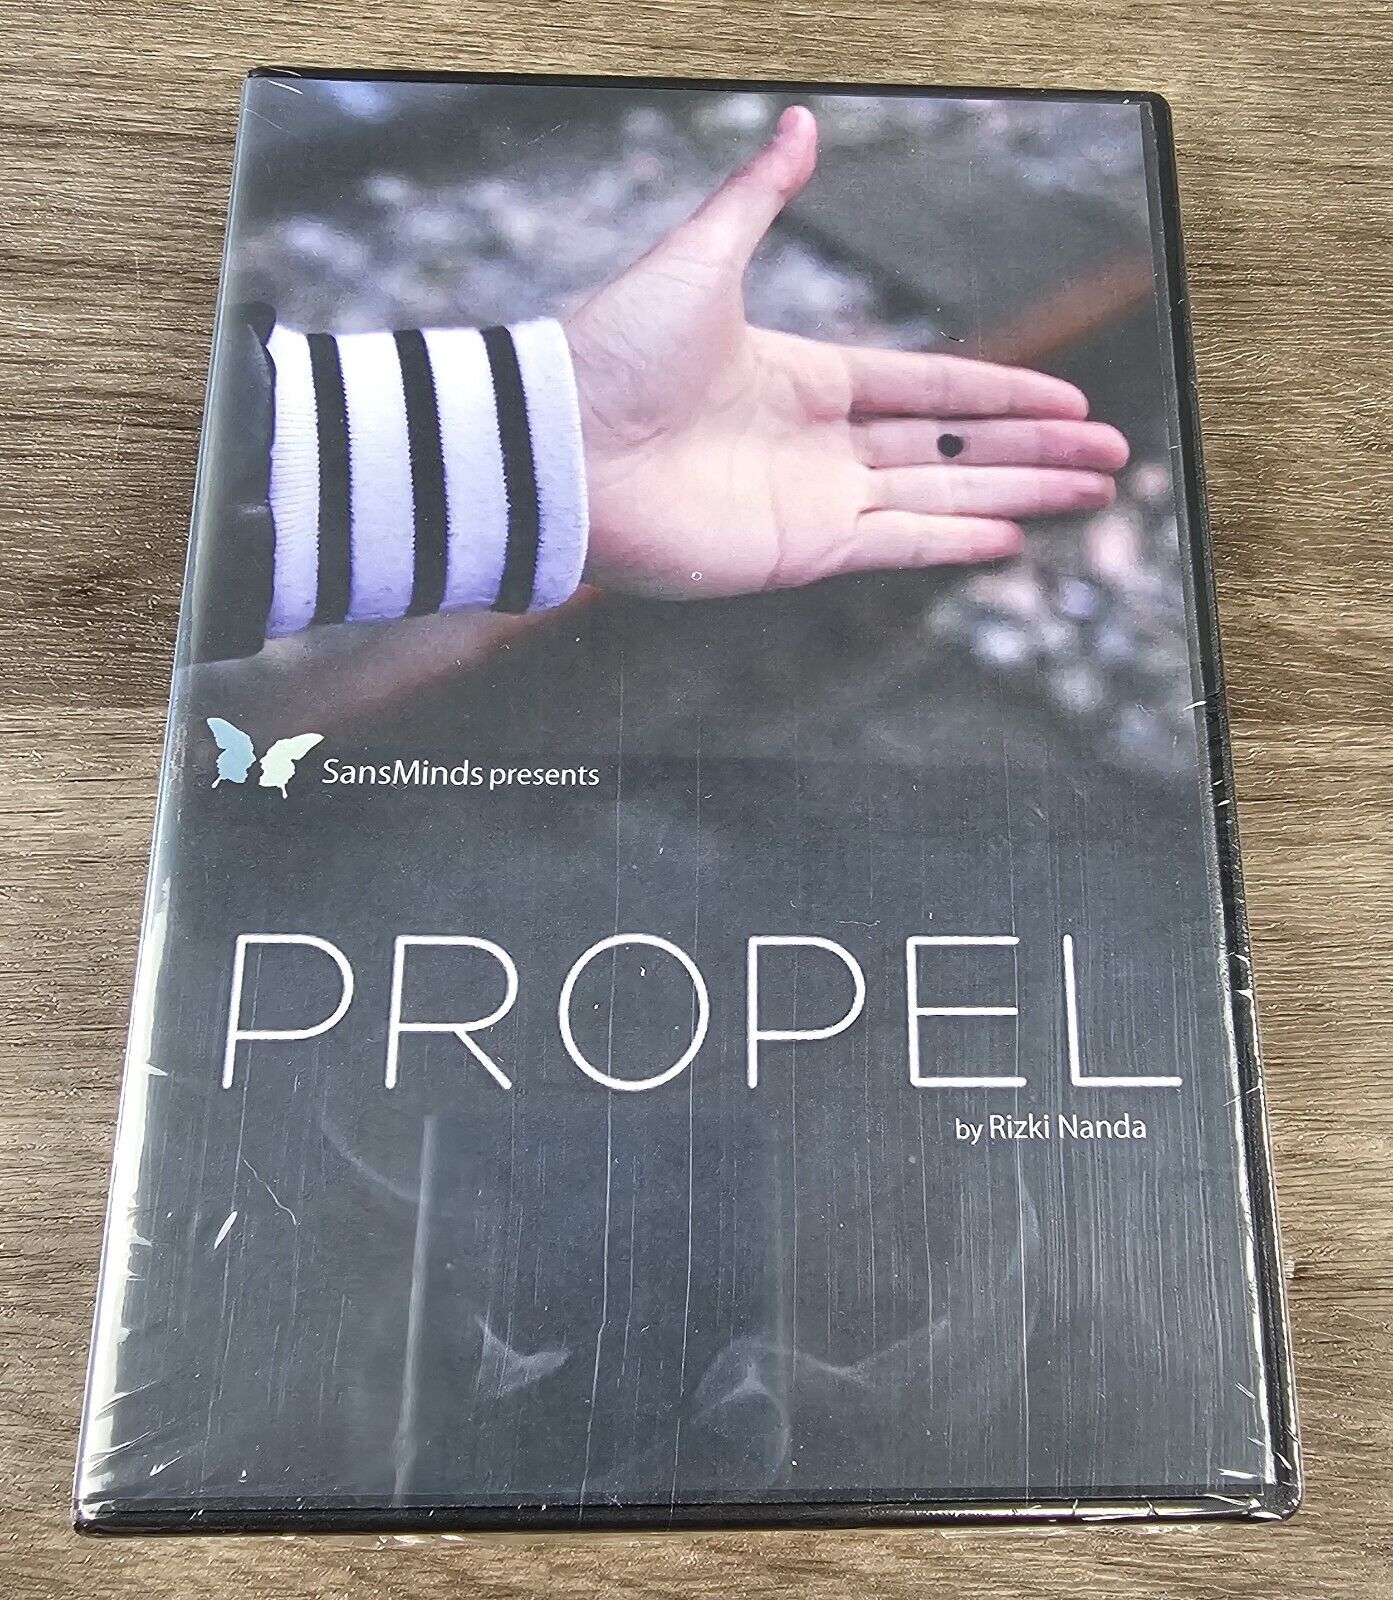 SansMinds presents 'Propel' by Rizki Nanda NOS - magic trick